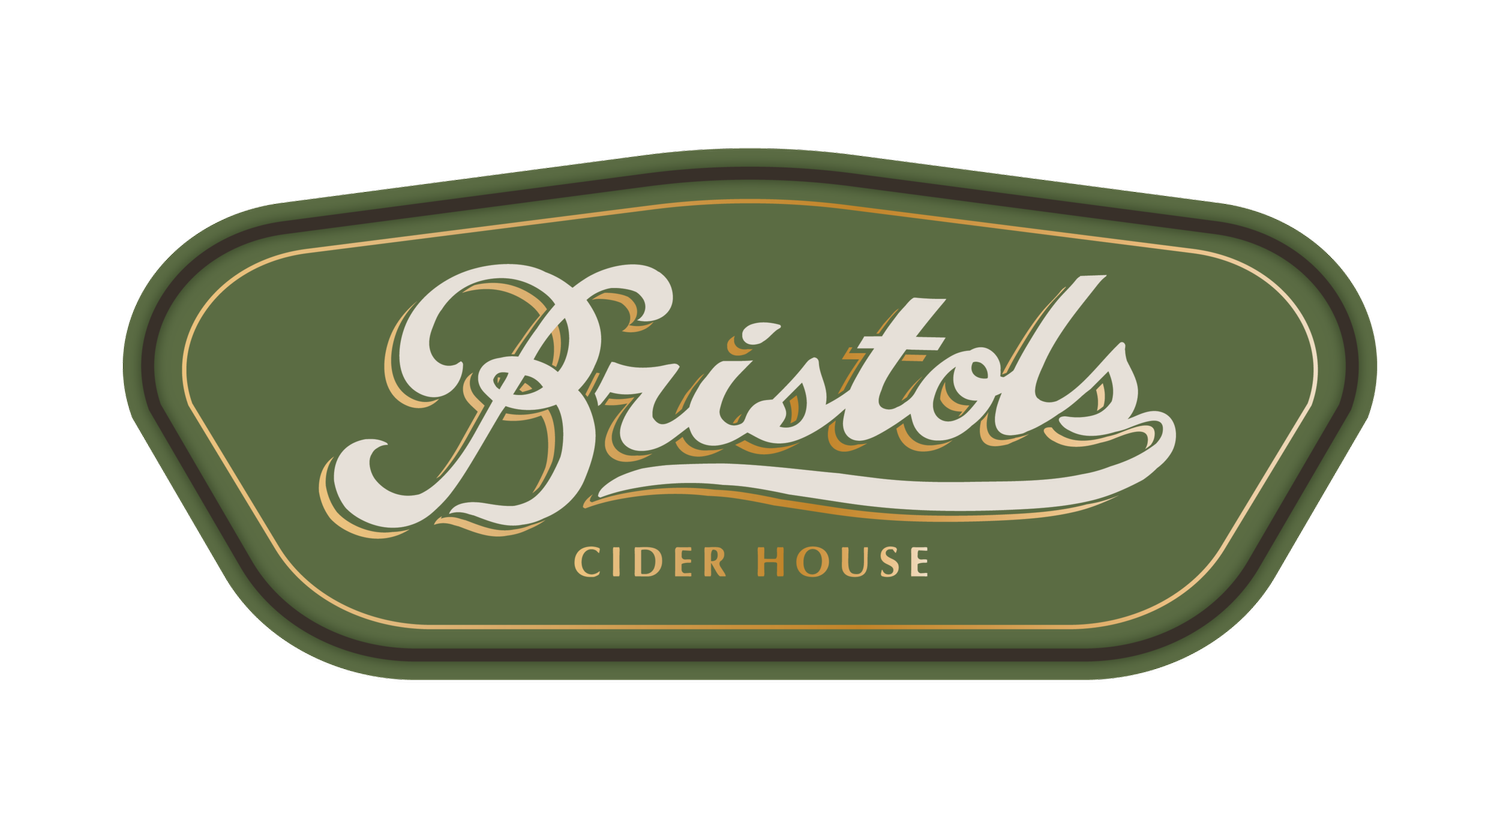  Bristols Cider